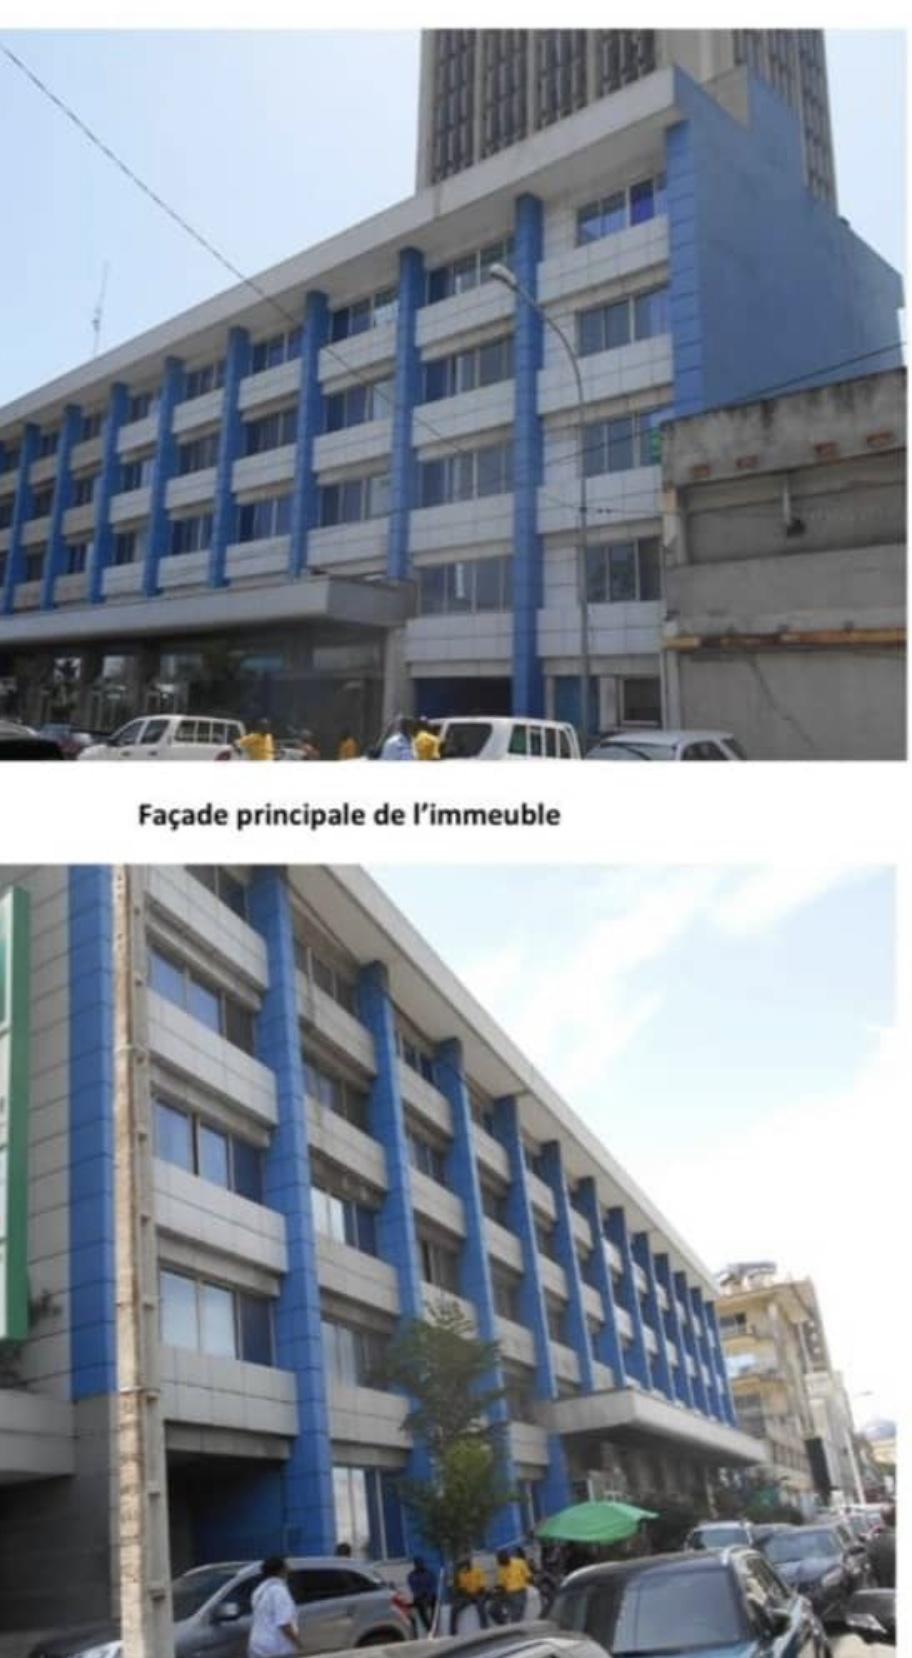 Vente d'un Immeuble à 8.000.000.000 FCFA  : Abidjan-Plateau (Plateau )